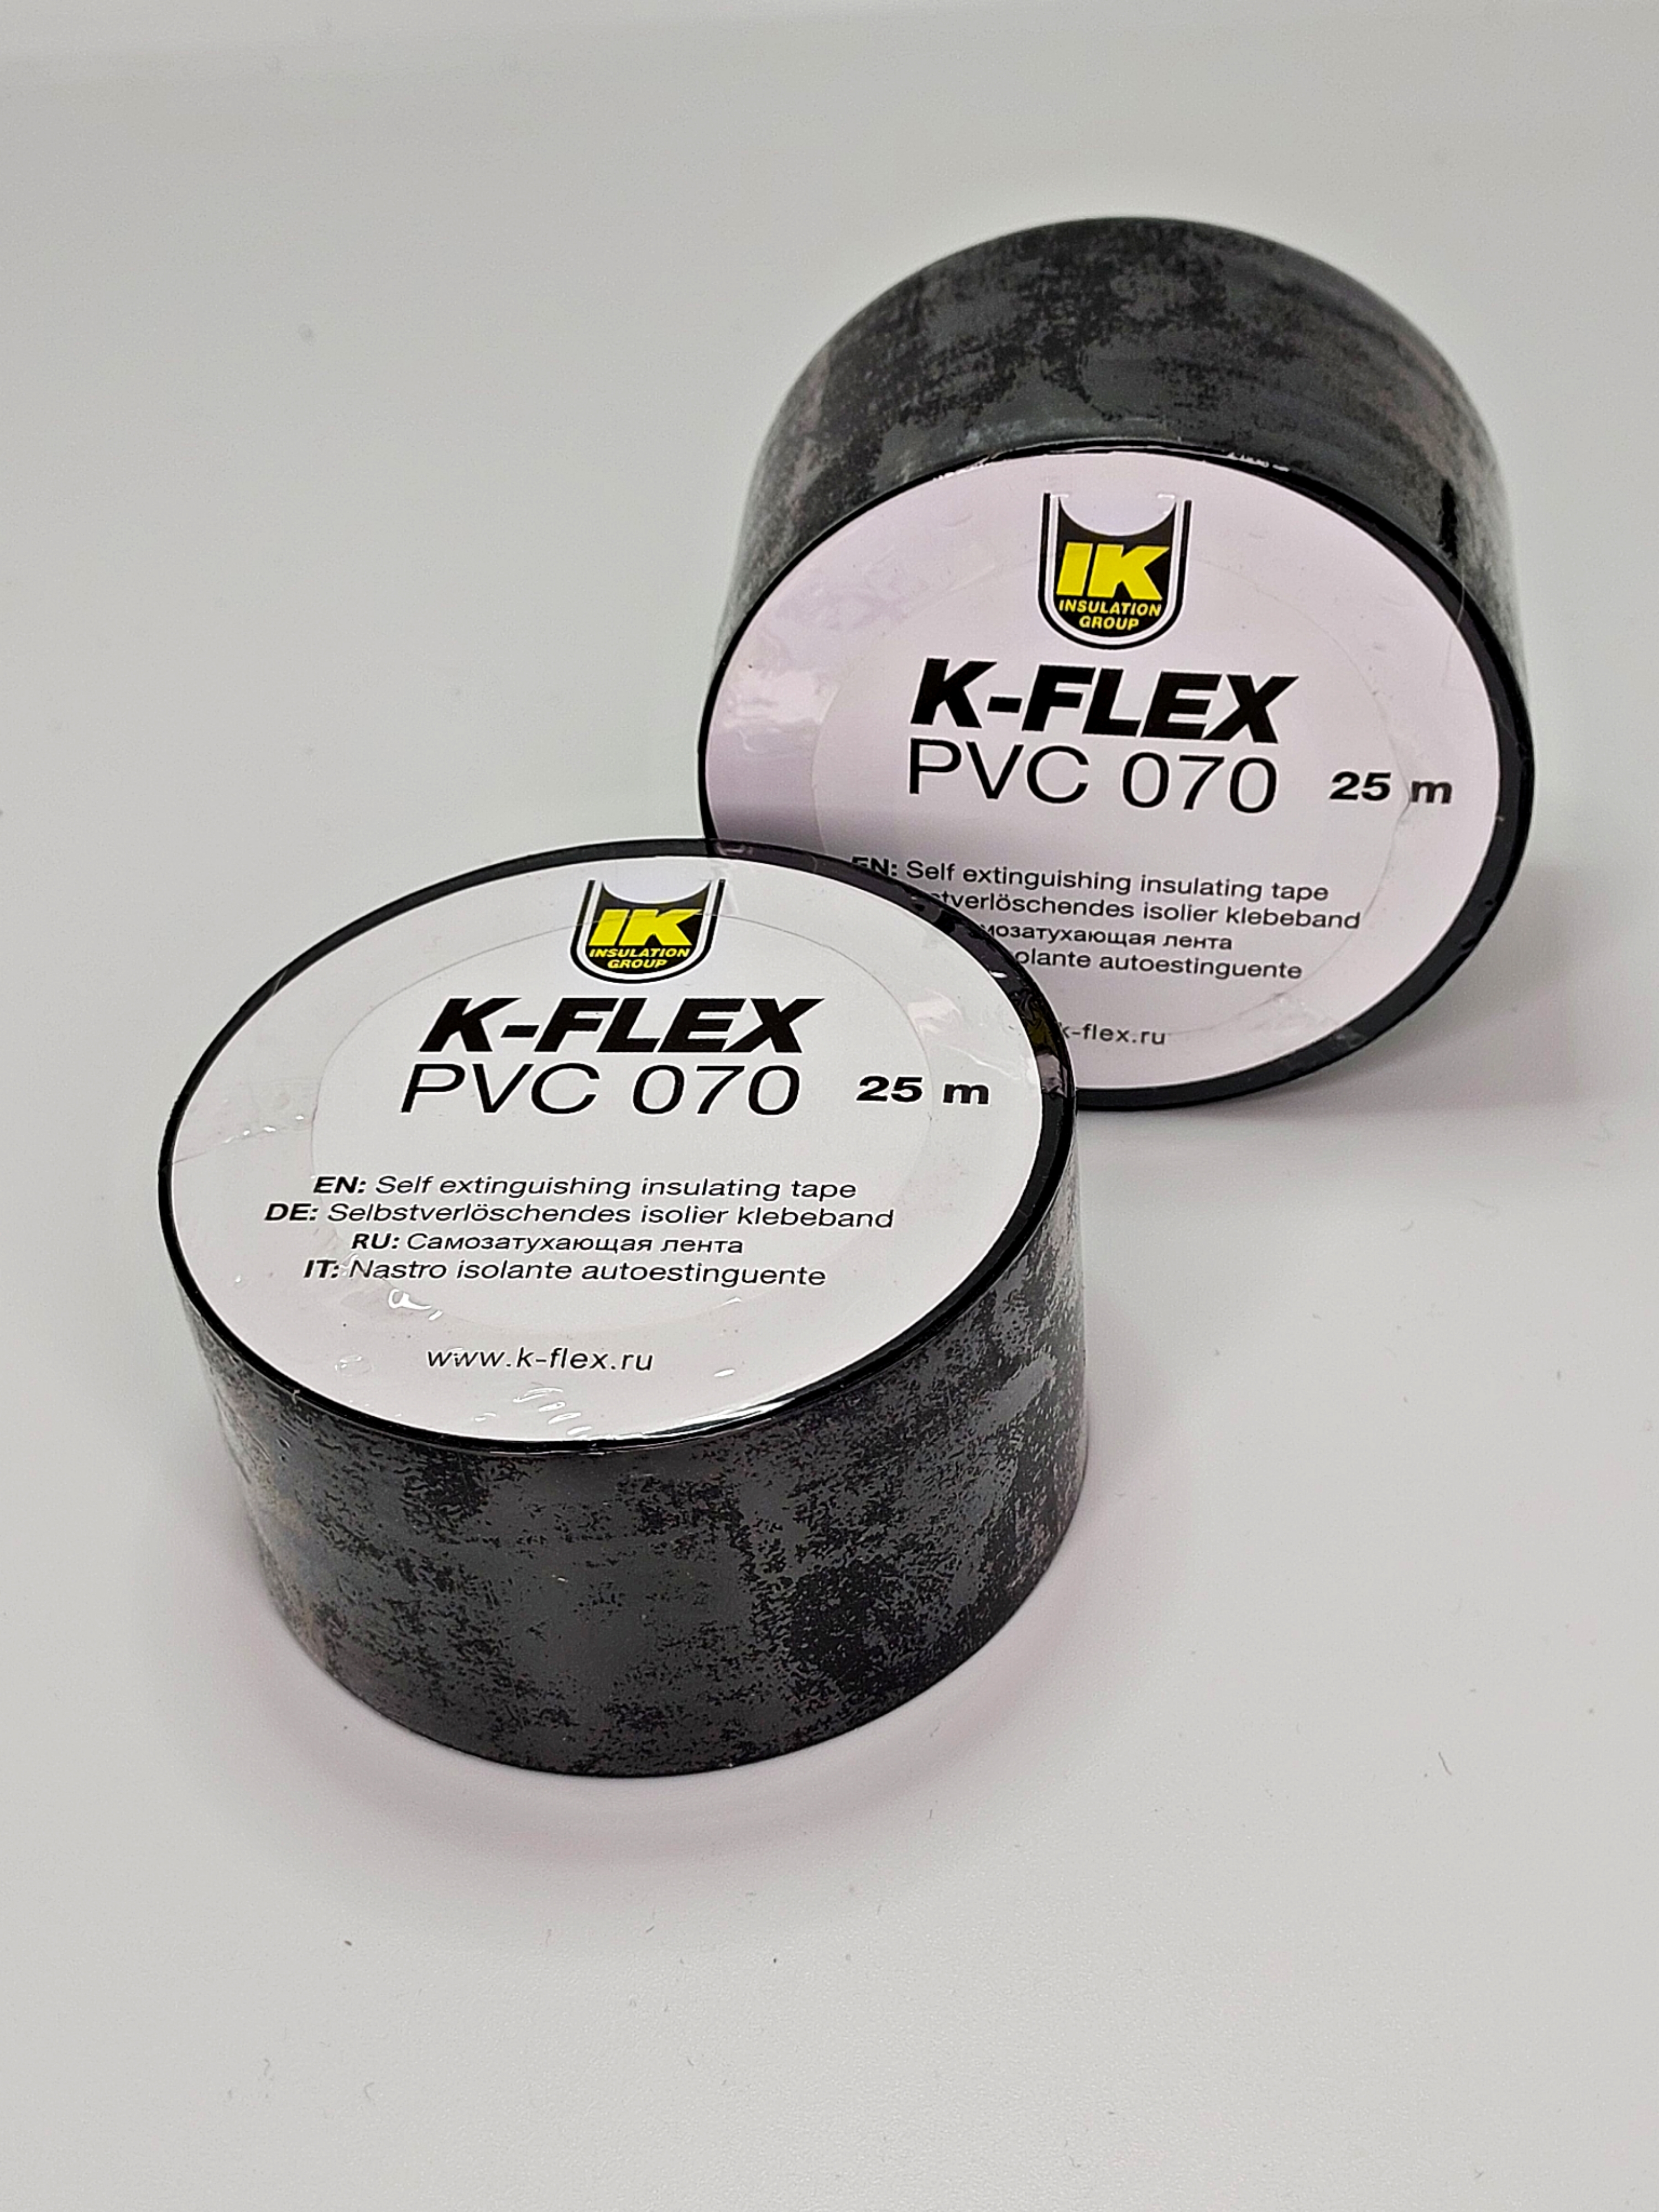 Клейкая лента k-Flex pvc070 (25м). Лента k-Flex 050-025 PVC at 070 Black. Лента k-Flex 038-025 PVC at 070 Black. Лента k-Flex PVC at 070 38мм*25м черная (уп=24шт). K flex pvc